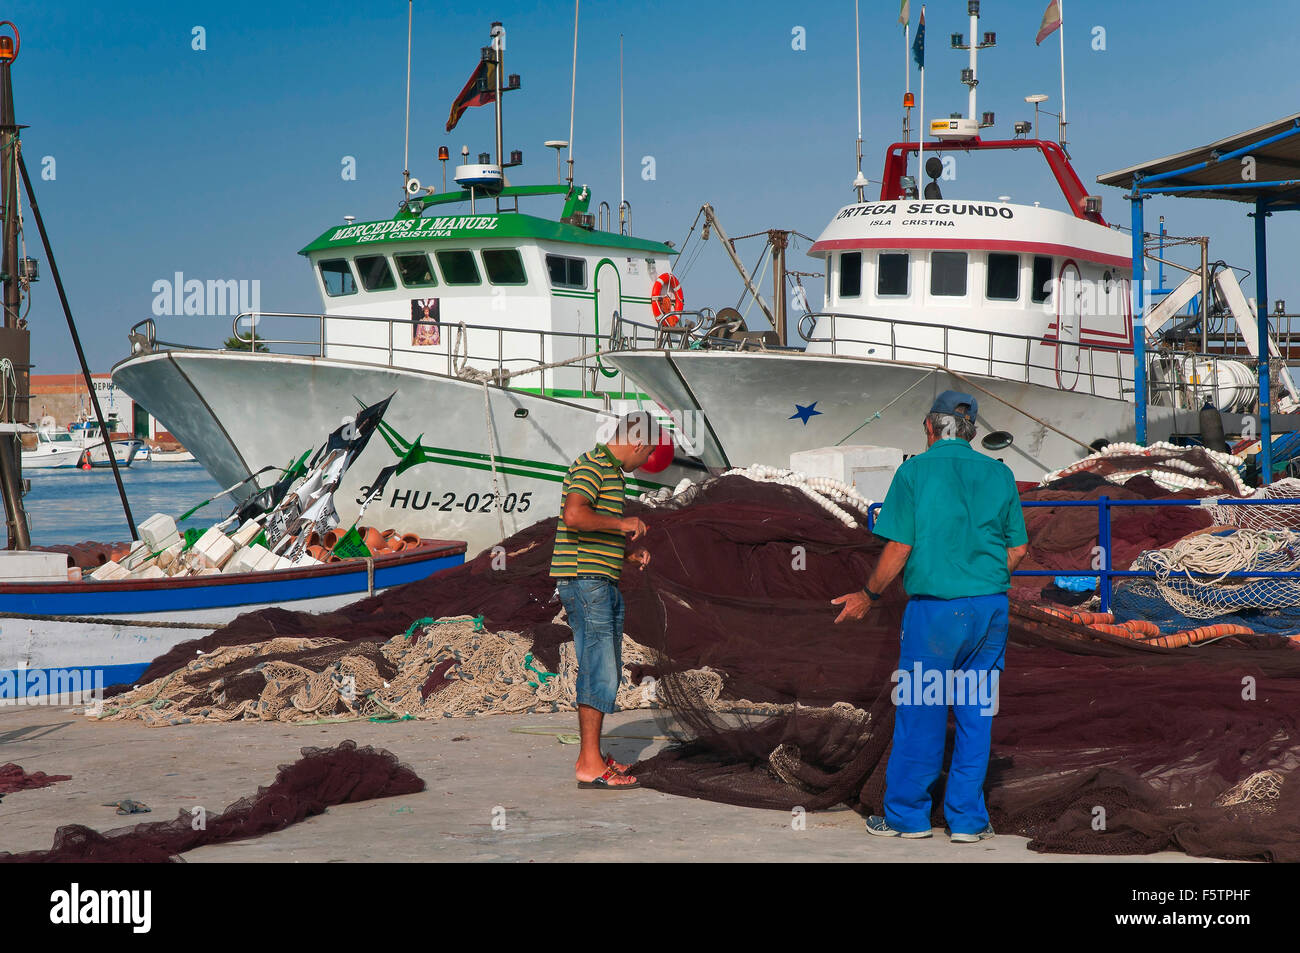 Port de pêche, Isla Cristina, province de Huelva, Andalousie, Espagne, Europe Banque D'Images